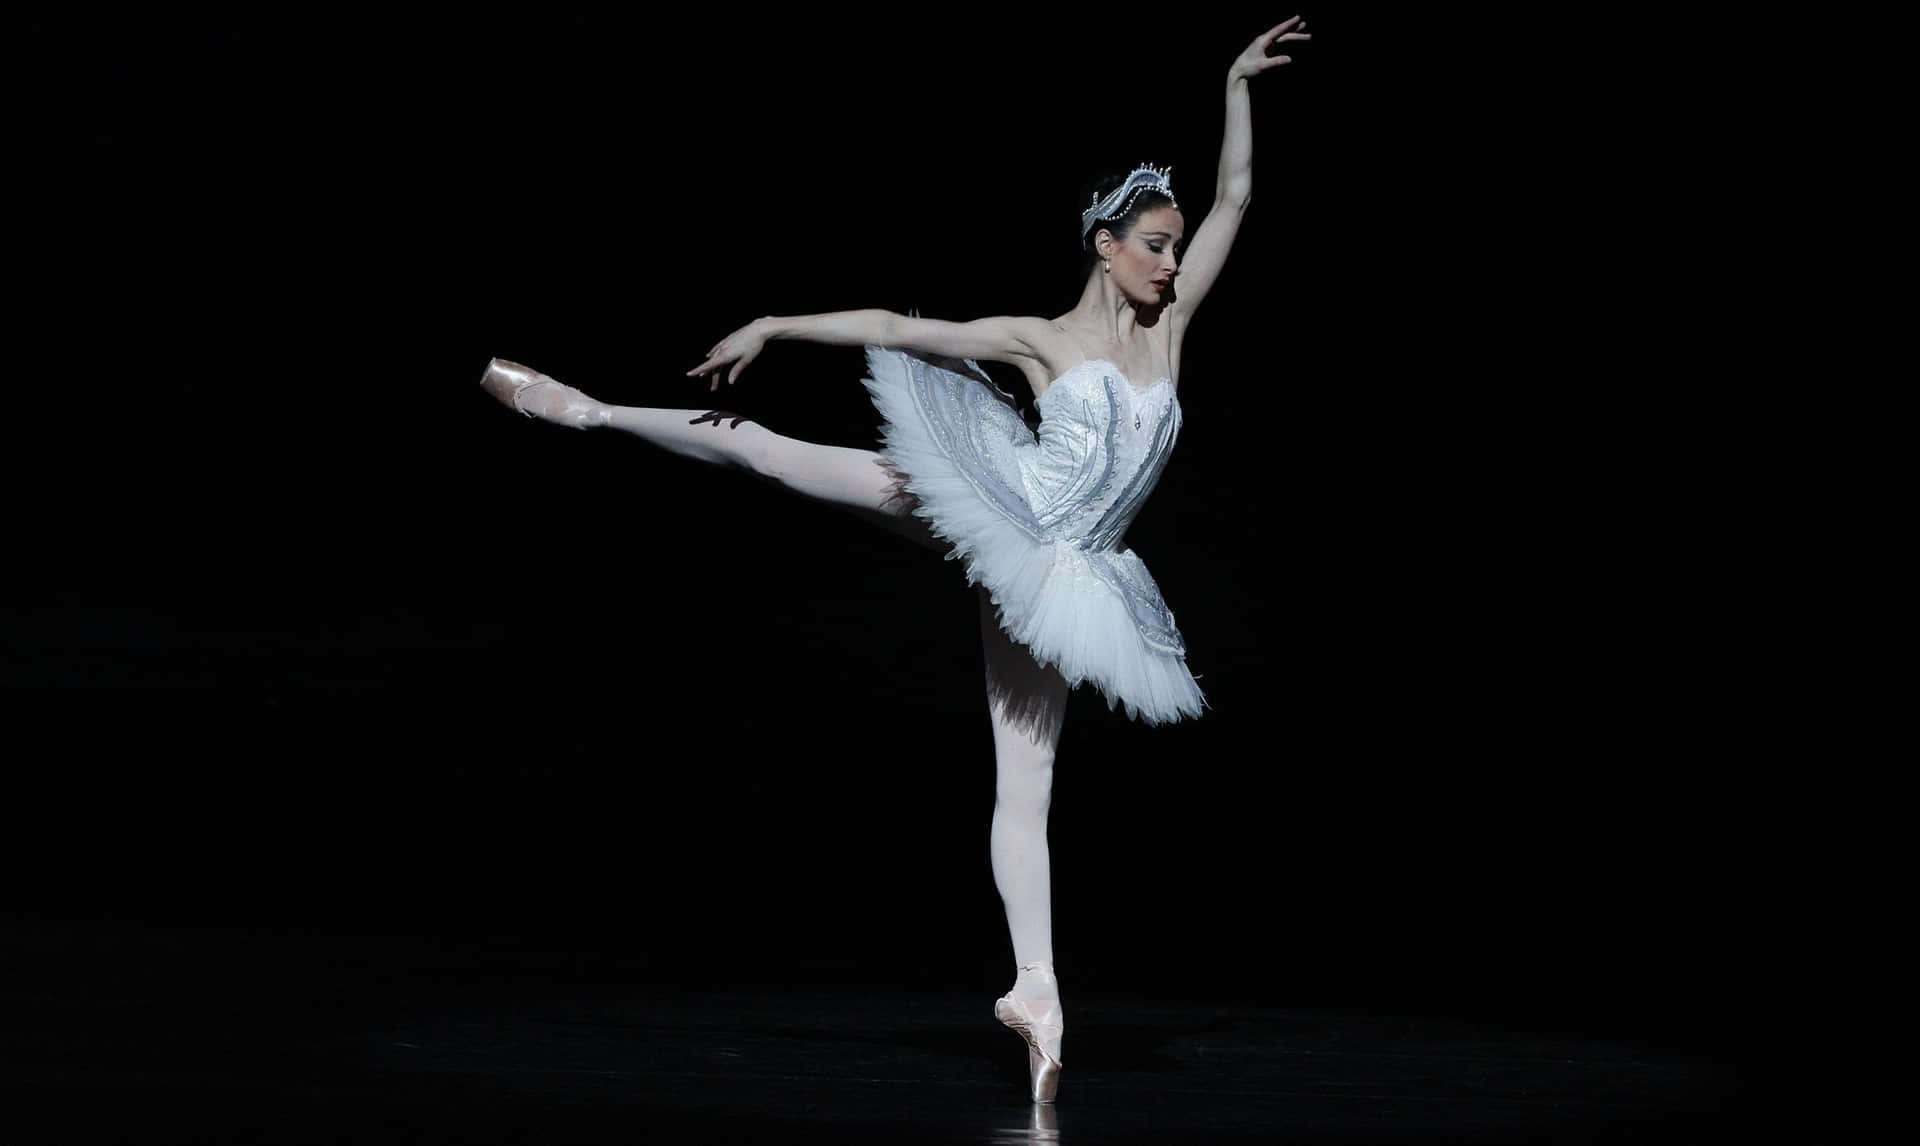 A Female Ballet Dancer In White Tutu On A Black Background